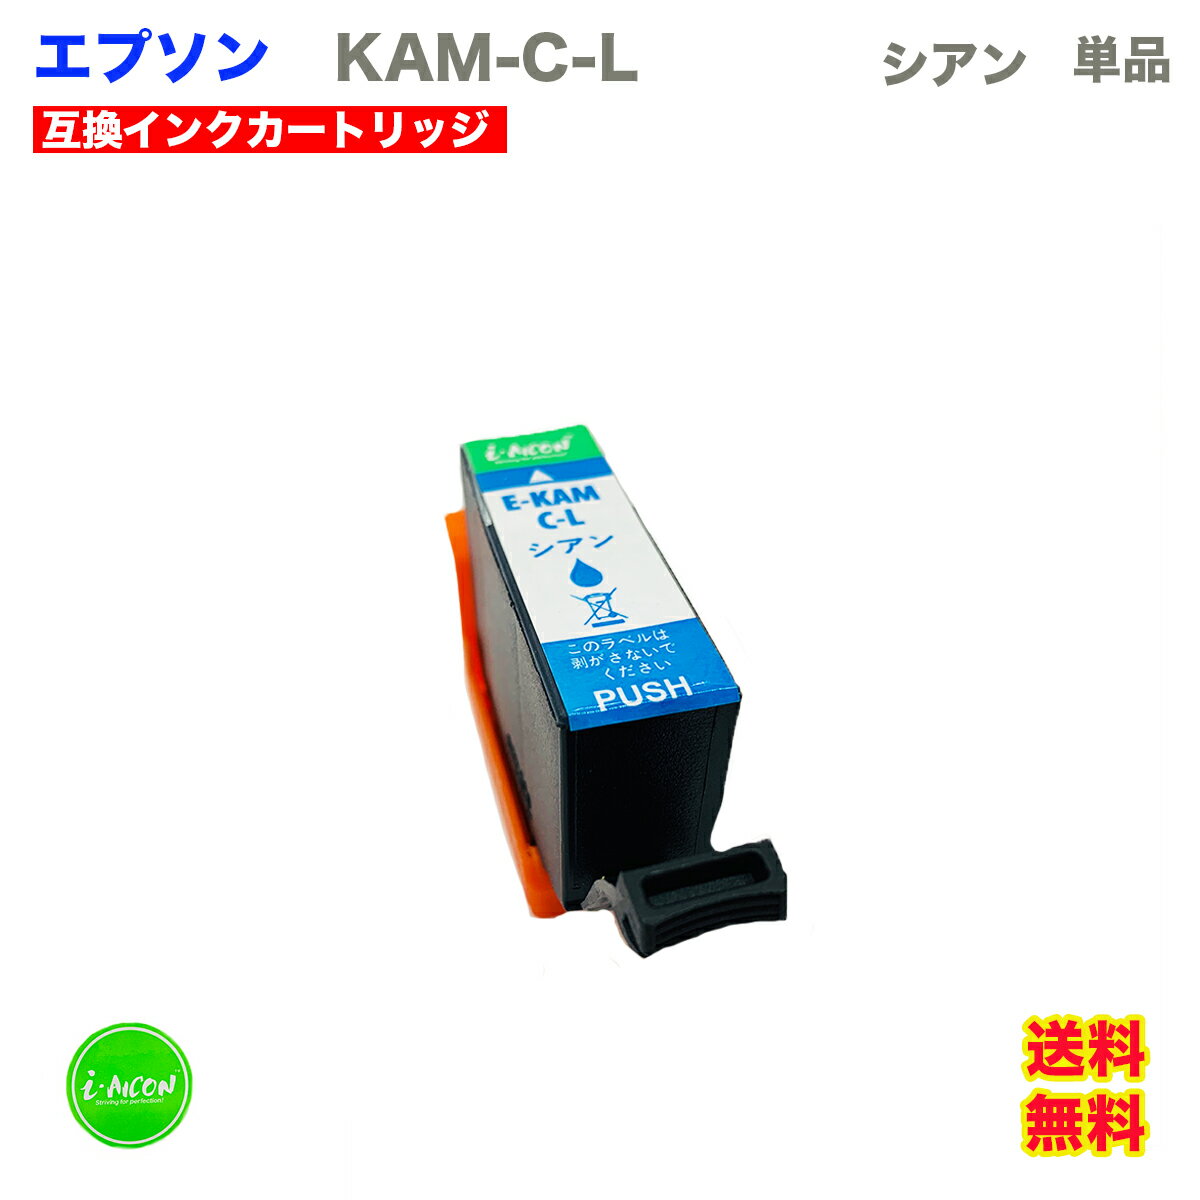 KAM 互換インクカートリッジ C シアン 互換インクカートリッジ 大容量 大きい XL 単品 キヤノン 互換インク 互換 インク インクカートリッジ KAM-C KAMC KAMC-L KAM-C-L i-con